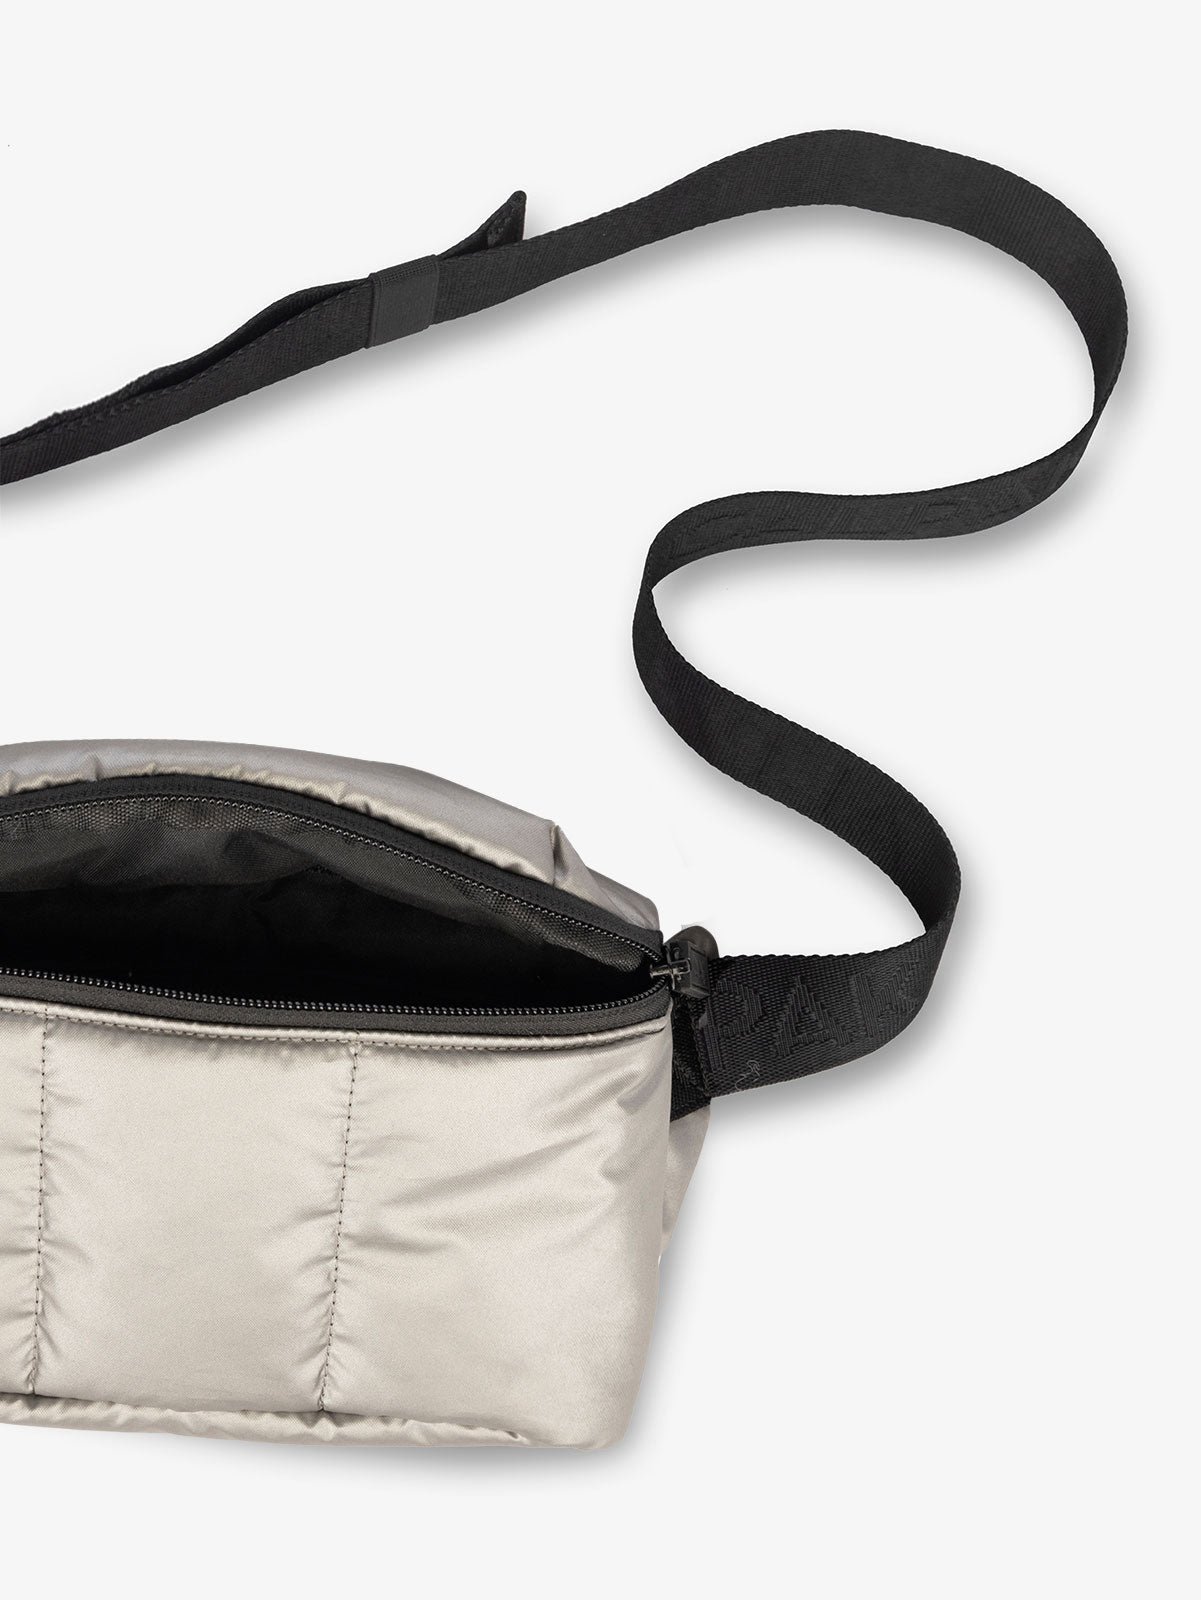 CALPAK Luka small travel waist Bag with multiple pockets in metallic gray